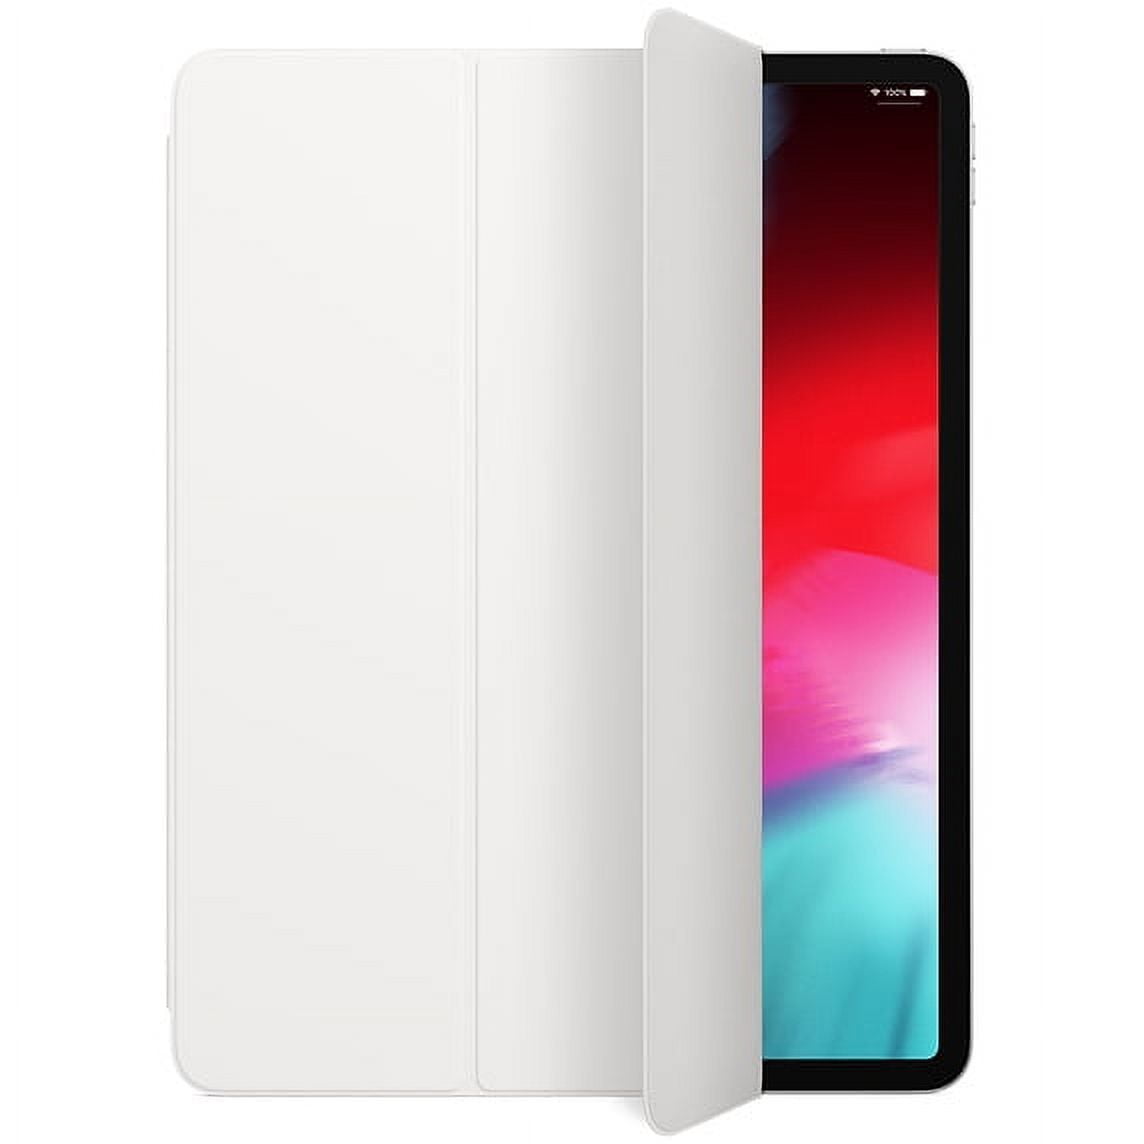 Smart Folio for iPad Pro 12.9-inch (5th generation) - Charcoal Gray